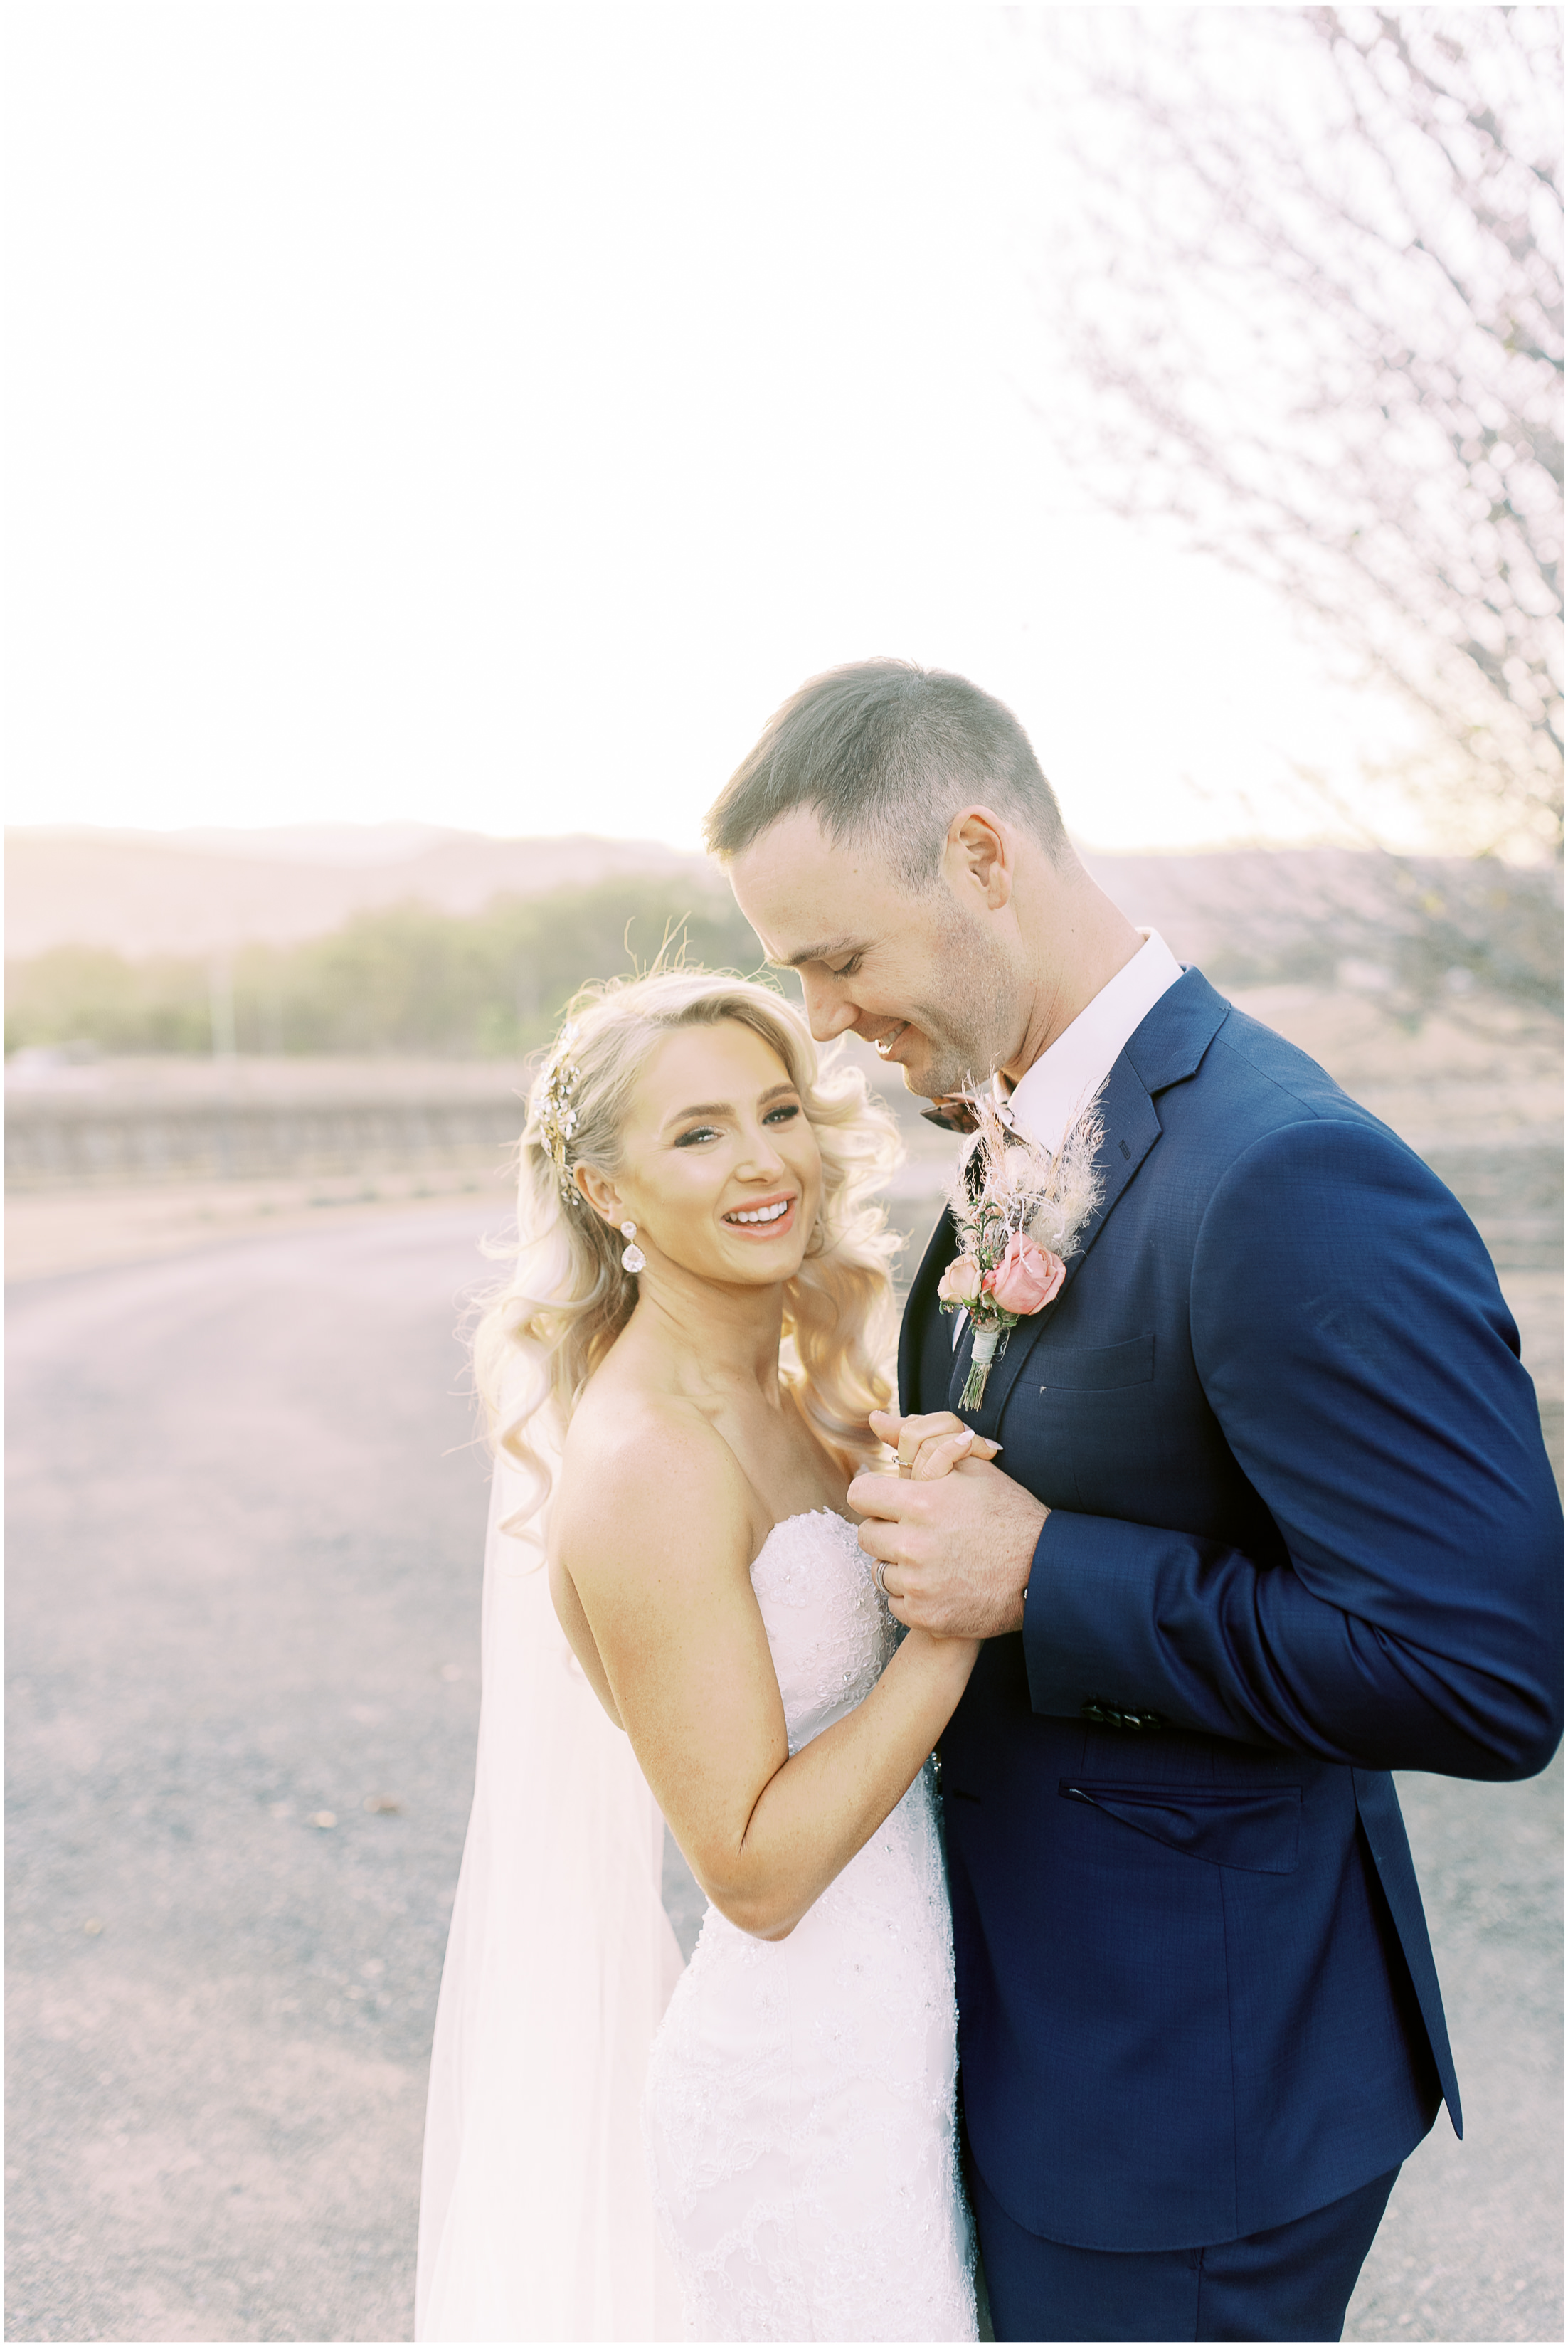 lauren-olivia-kooroomba-fine-art-wedding-photographer-australia-lavendar-farm-38.jpg